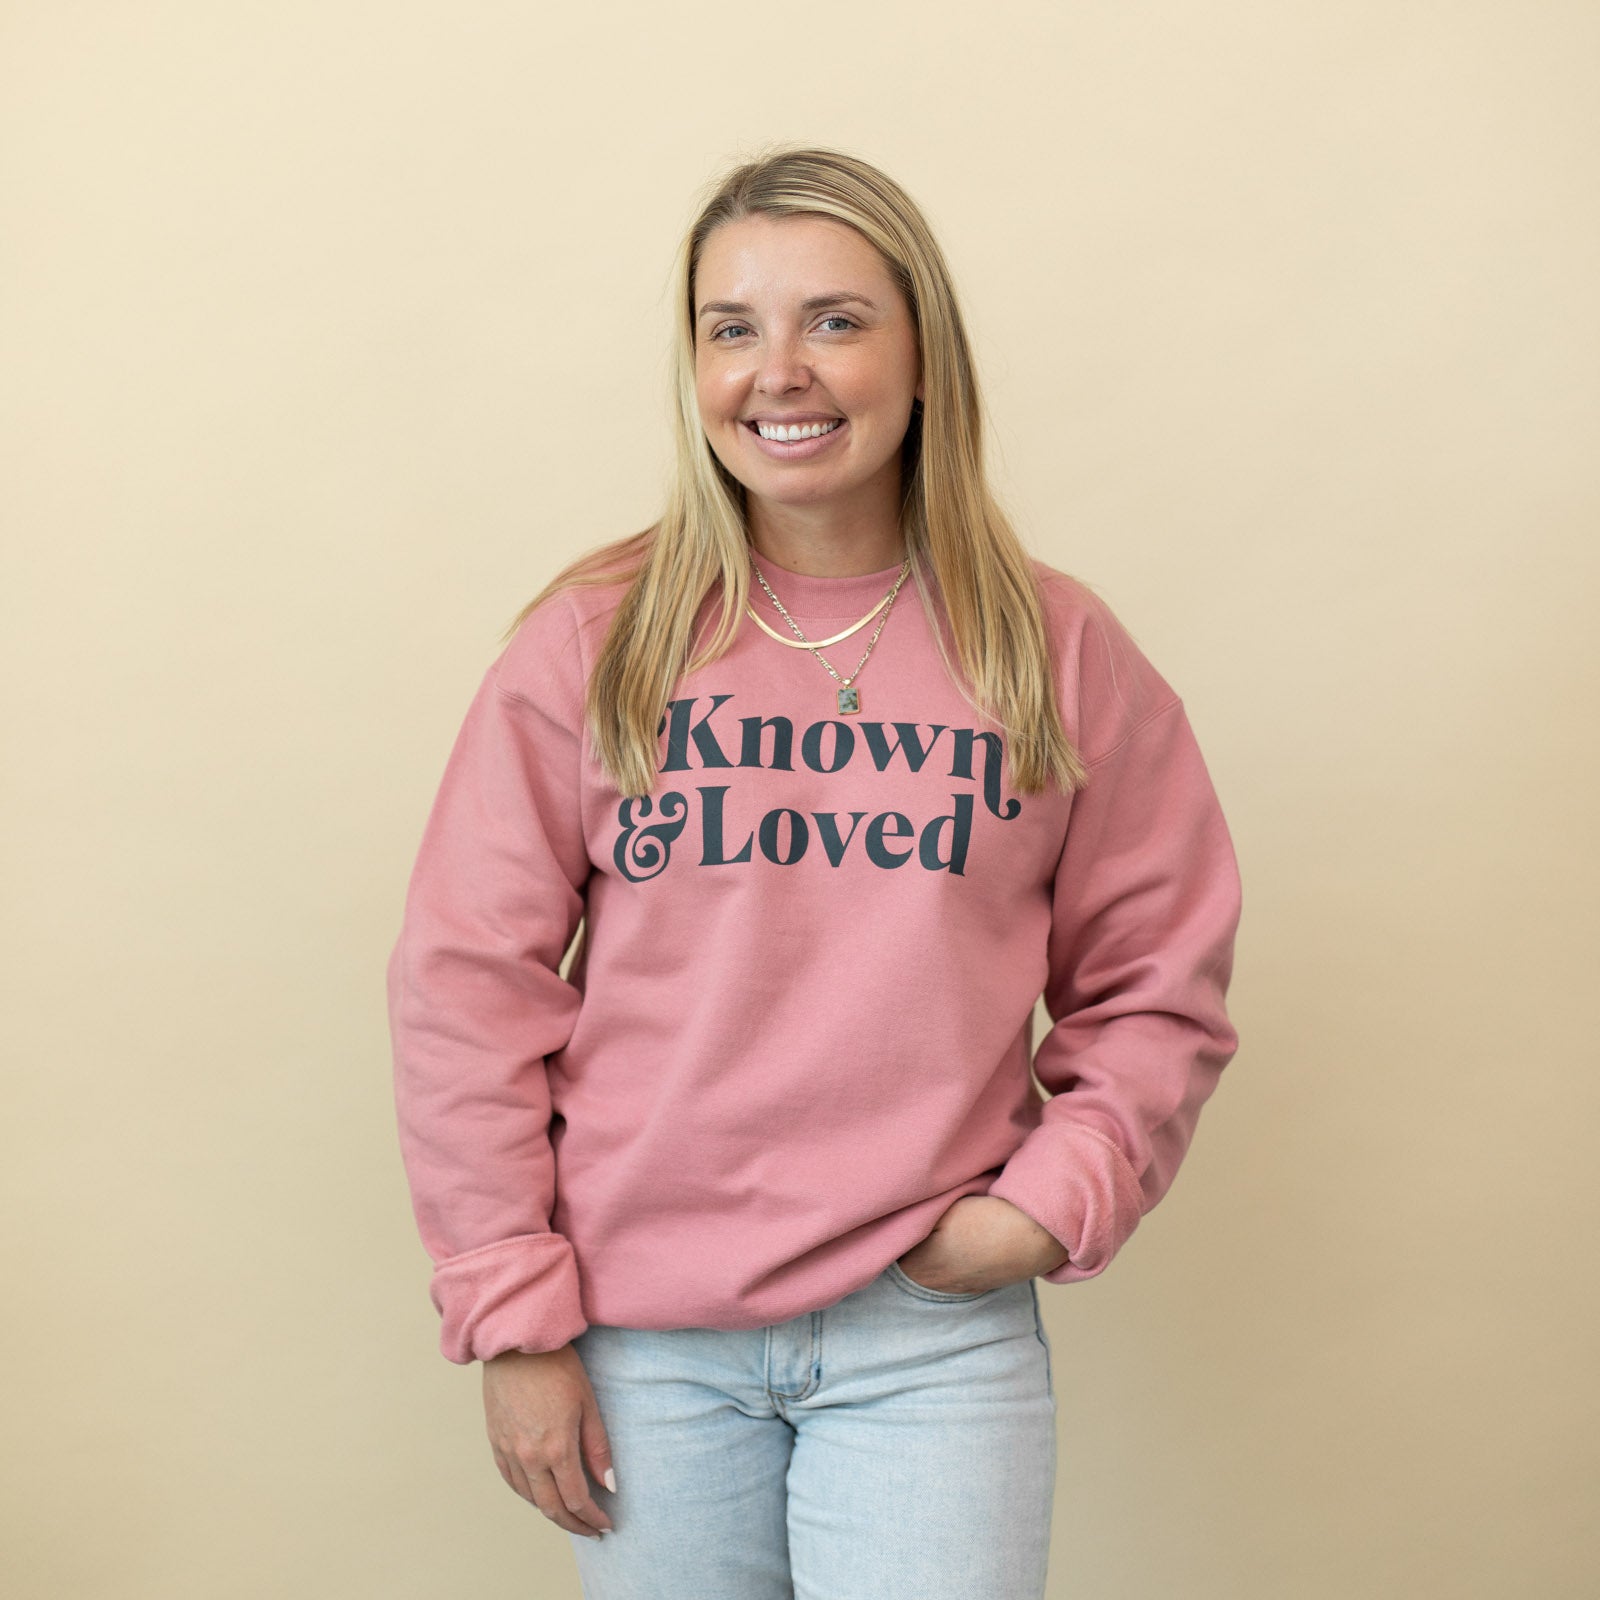 "Known & Loved" Sweatshirt